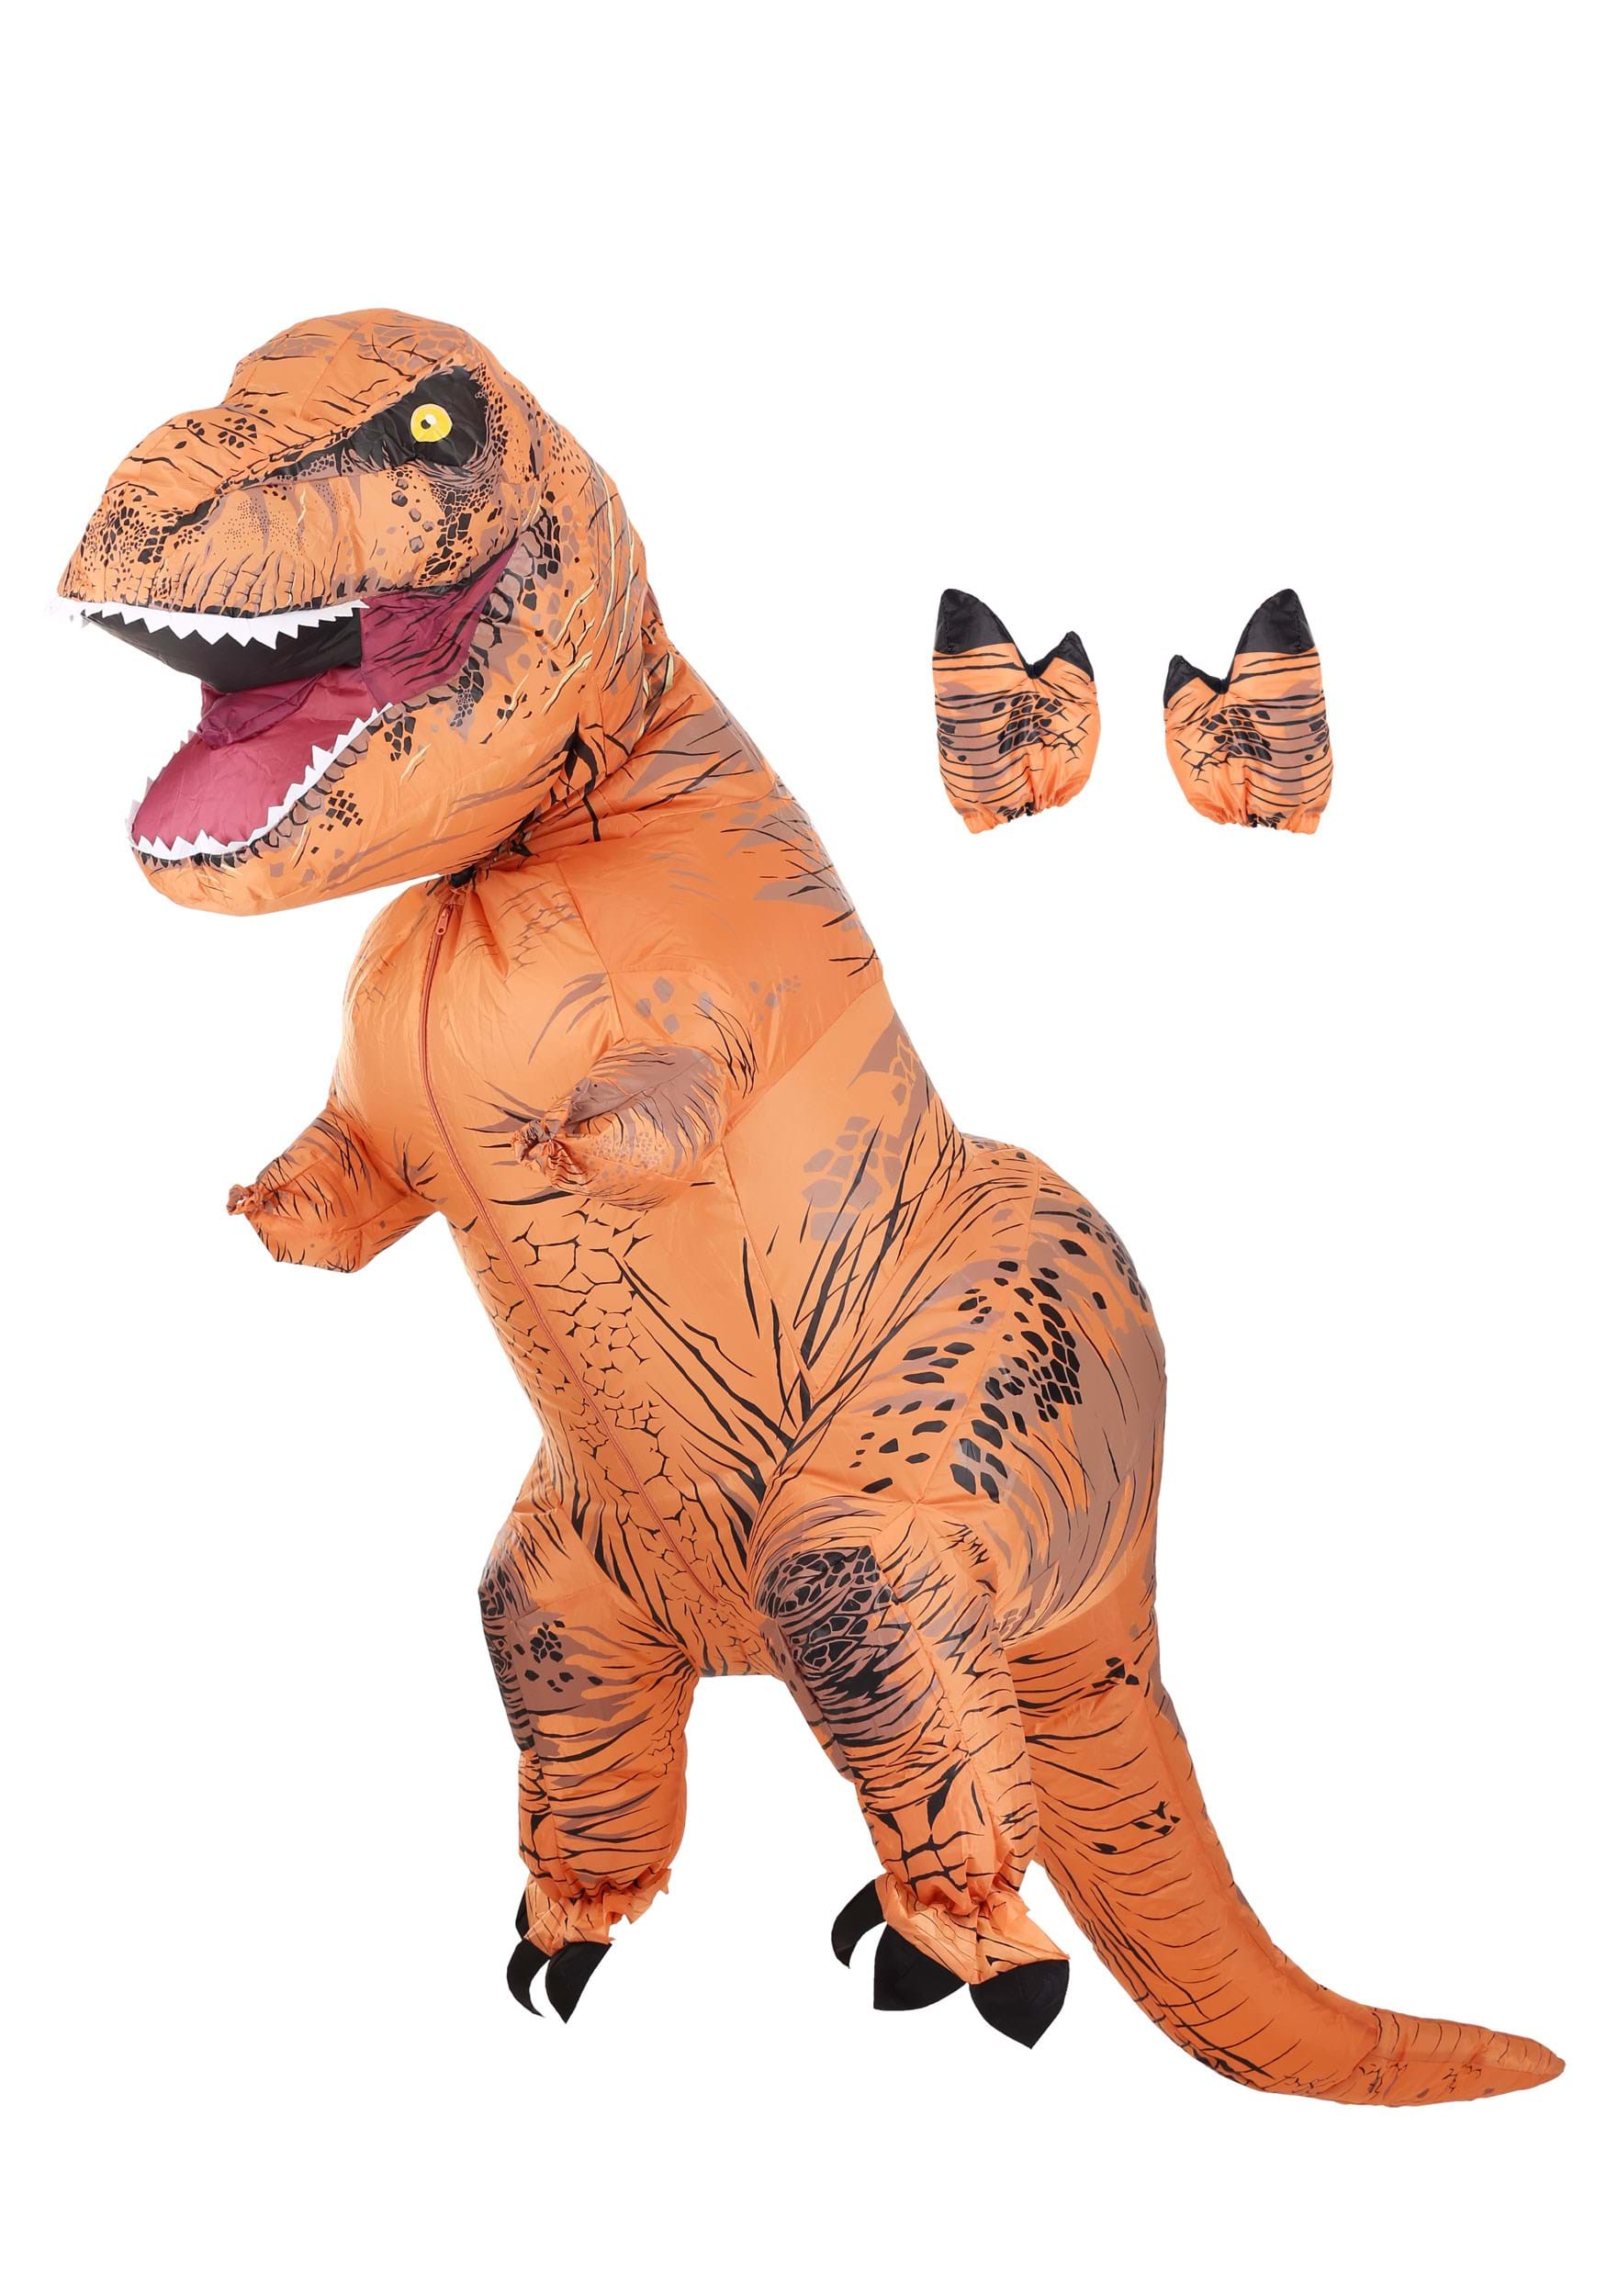 Child Inflatable Trex Dinosaur Costume Kids Boys Jurassic Blow Up T Rex  T-Rex